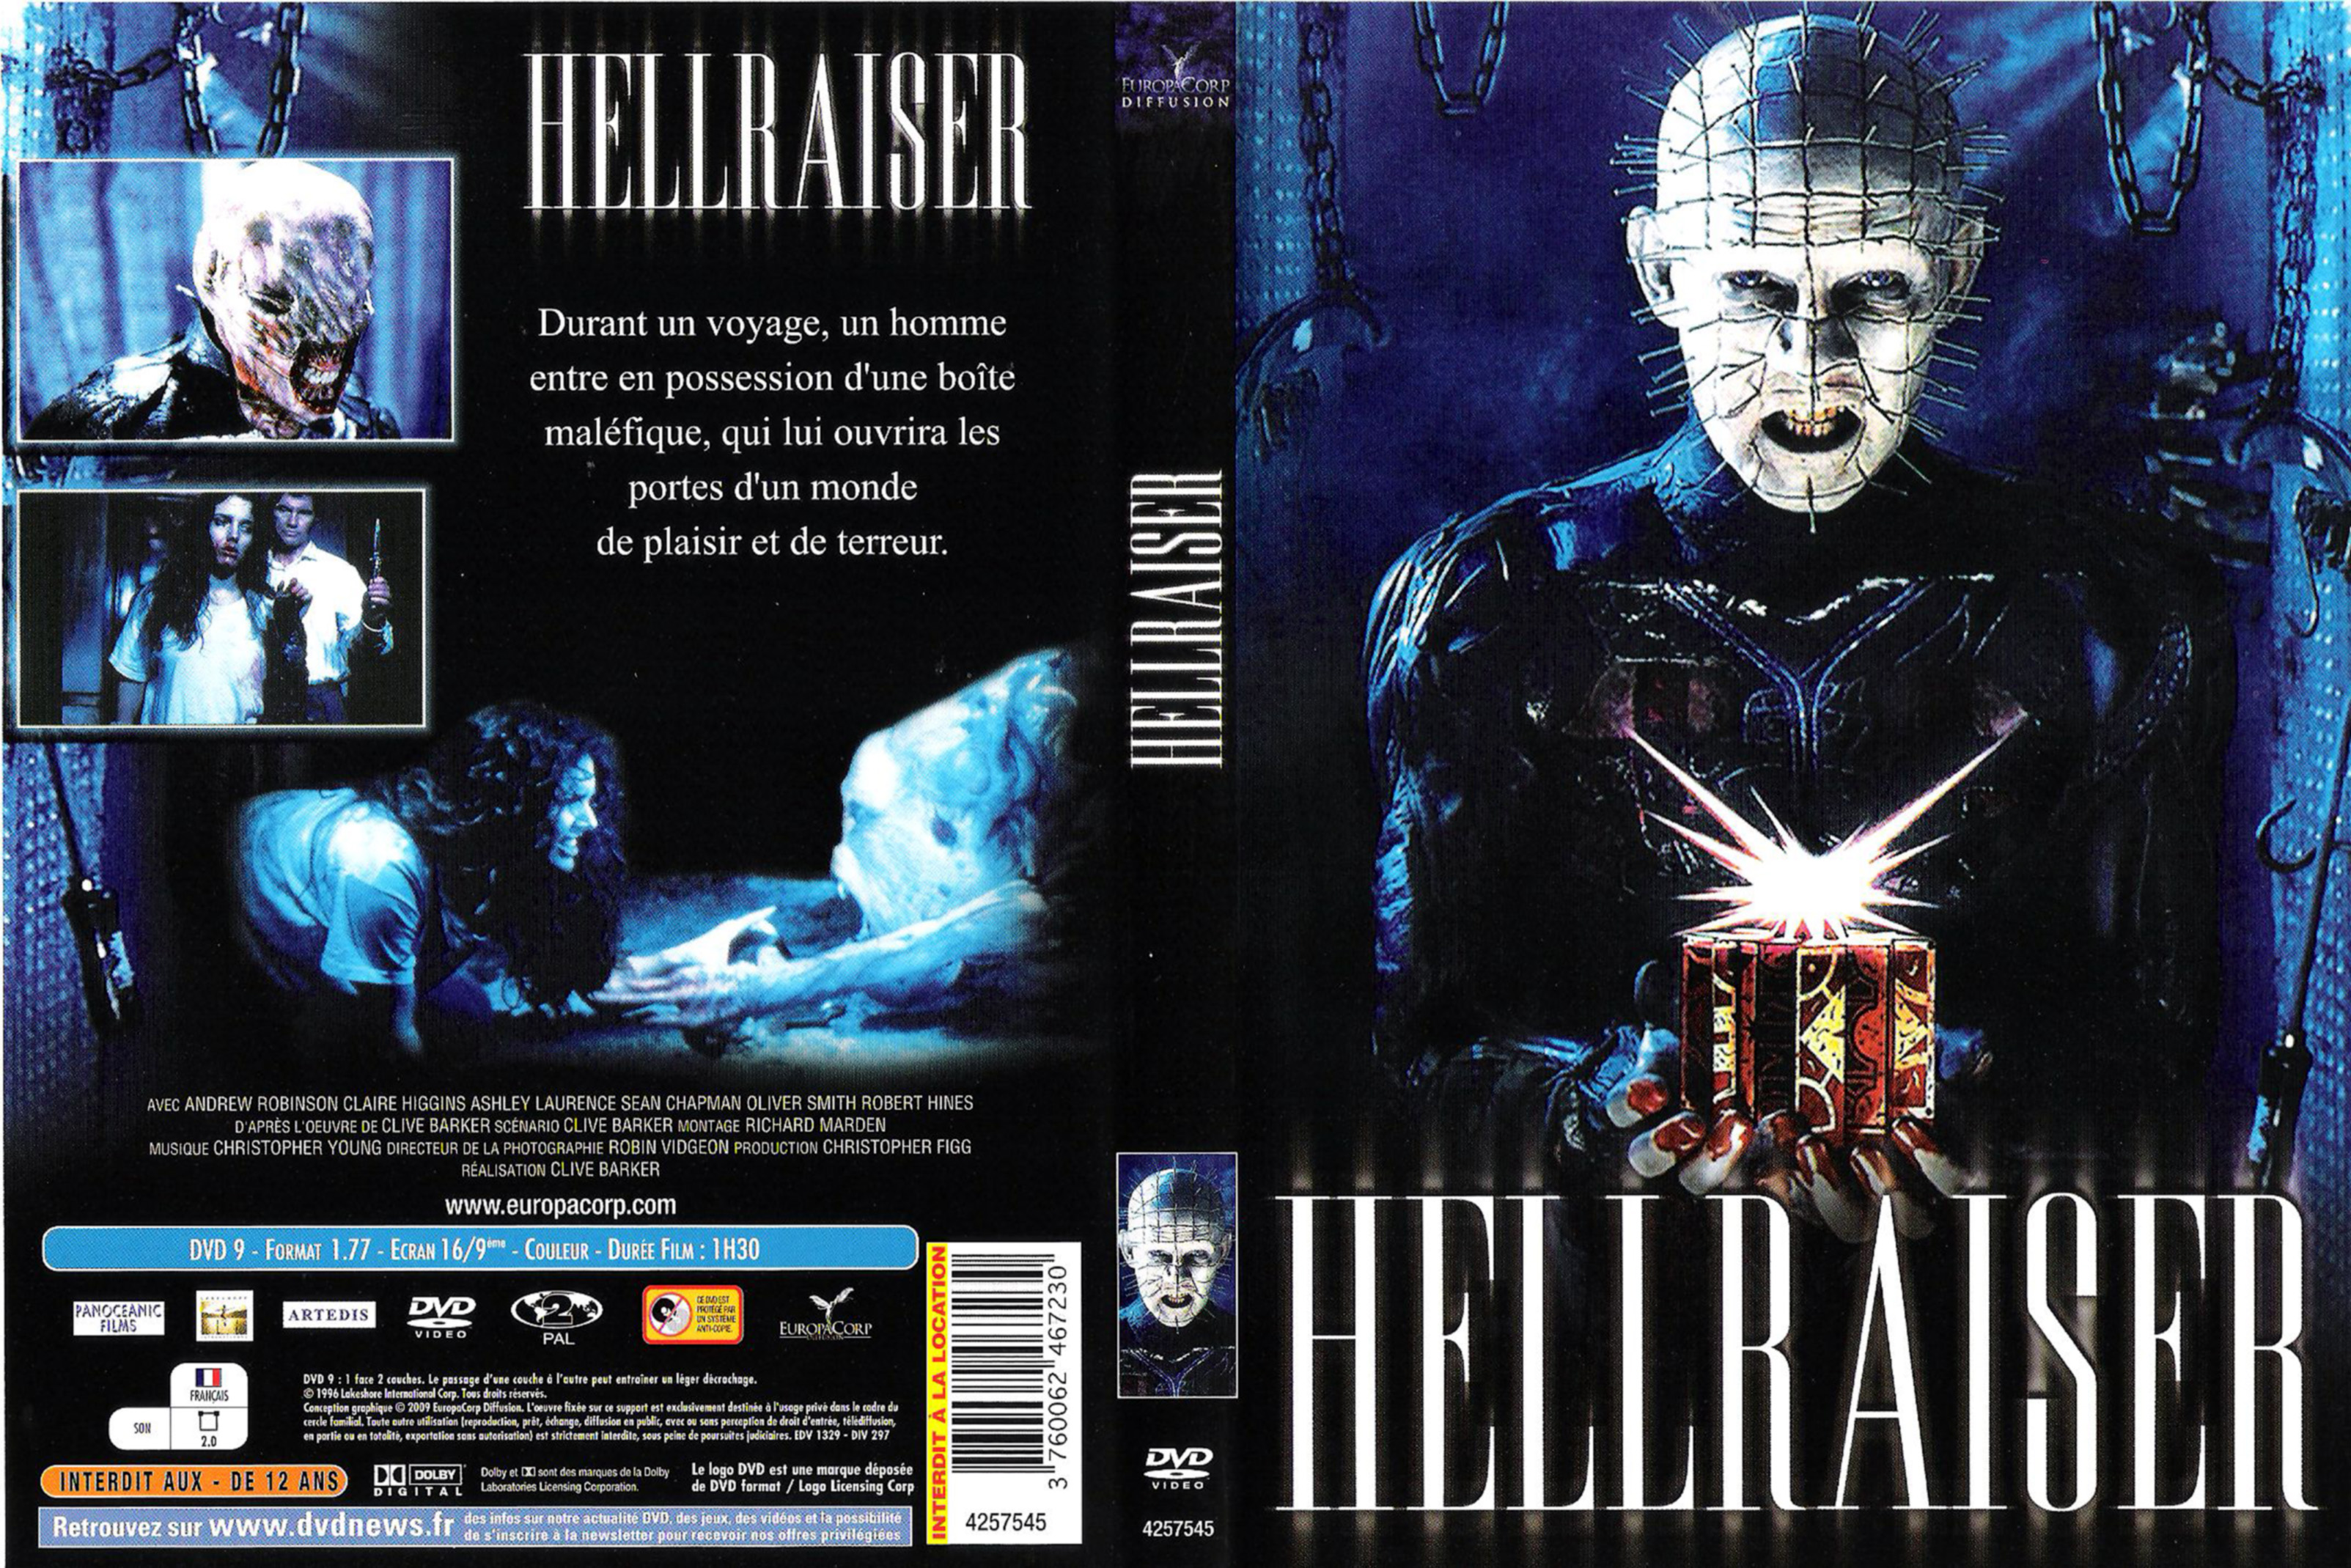 Jaquette DVD Hellraiser v2